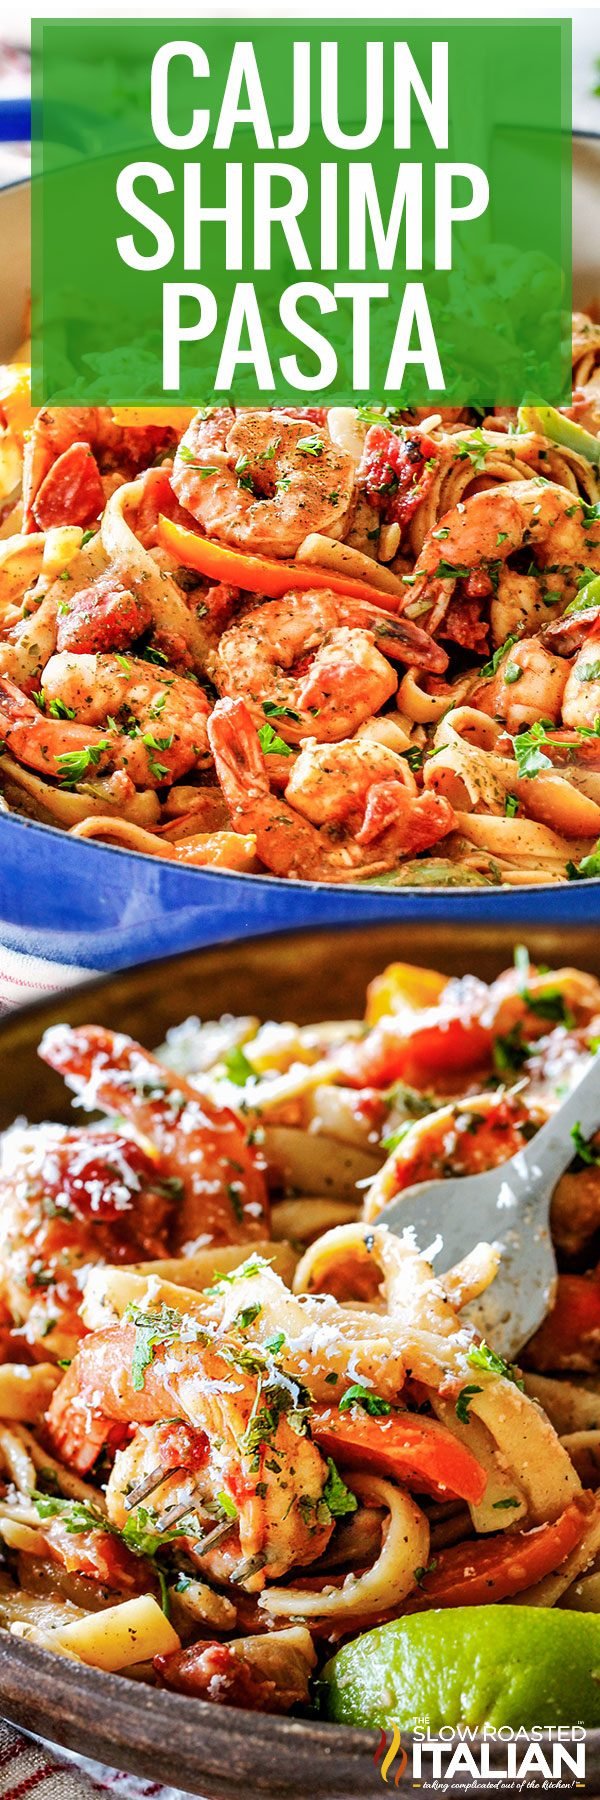 titled image for cajun shrimp pasta